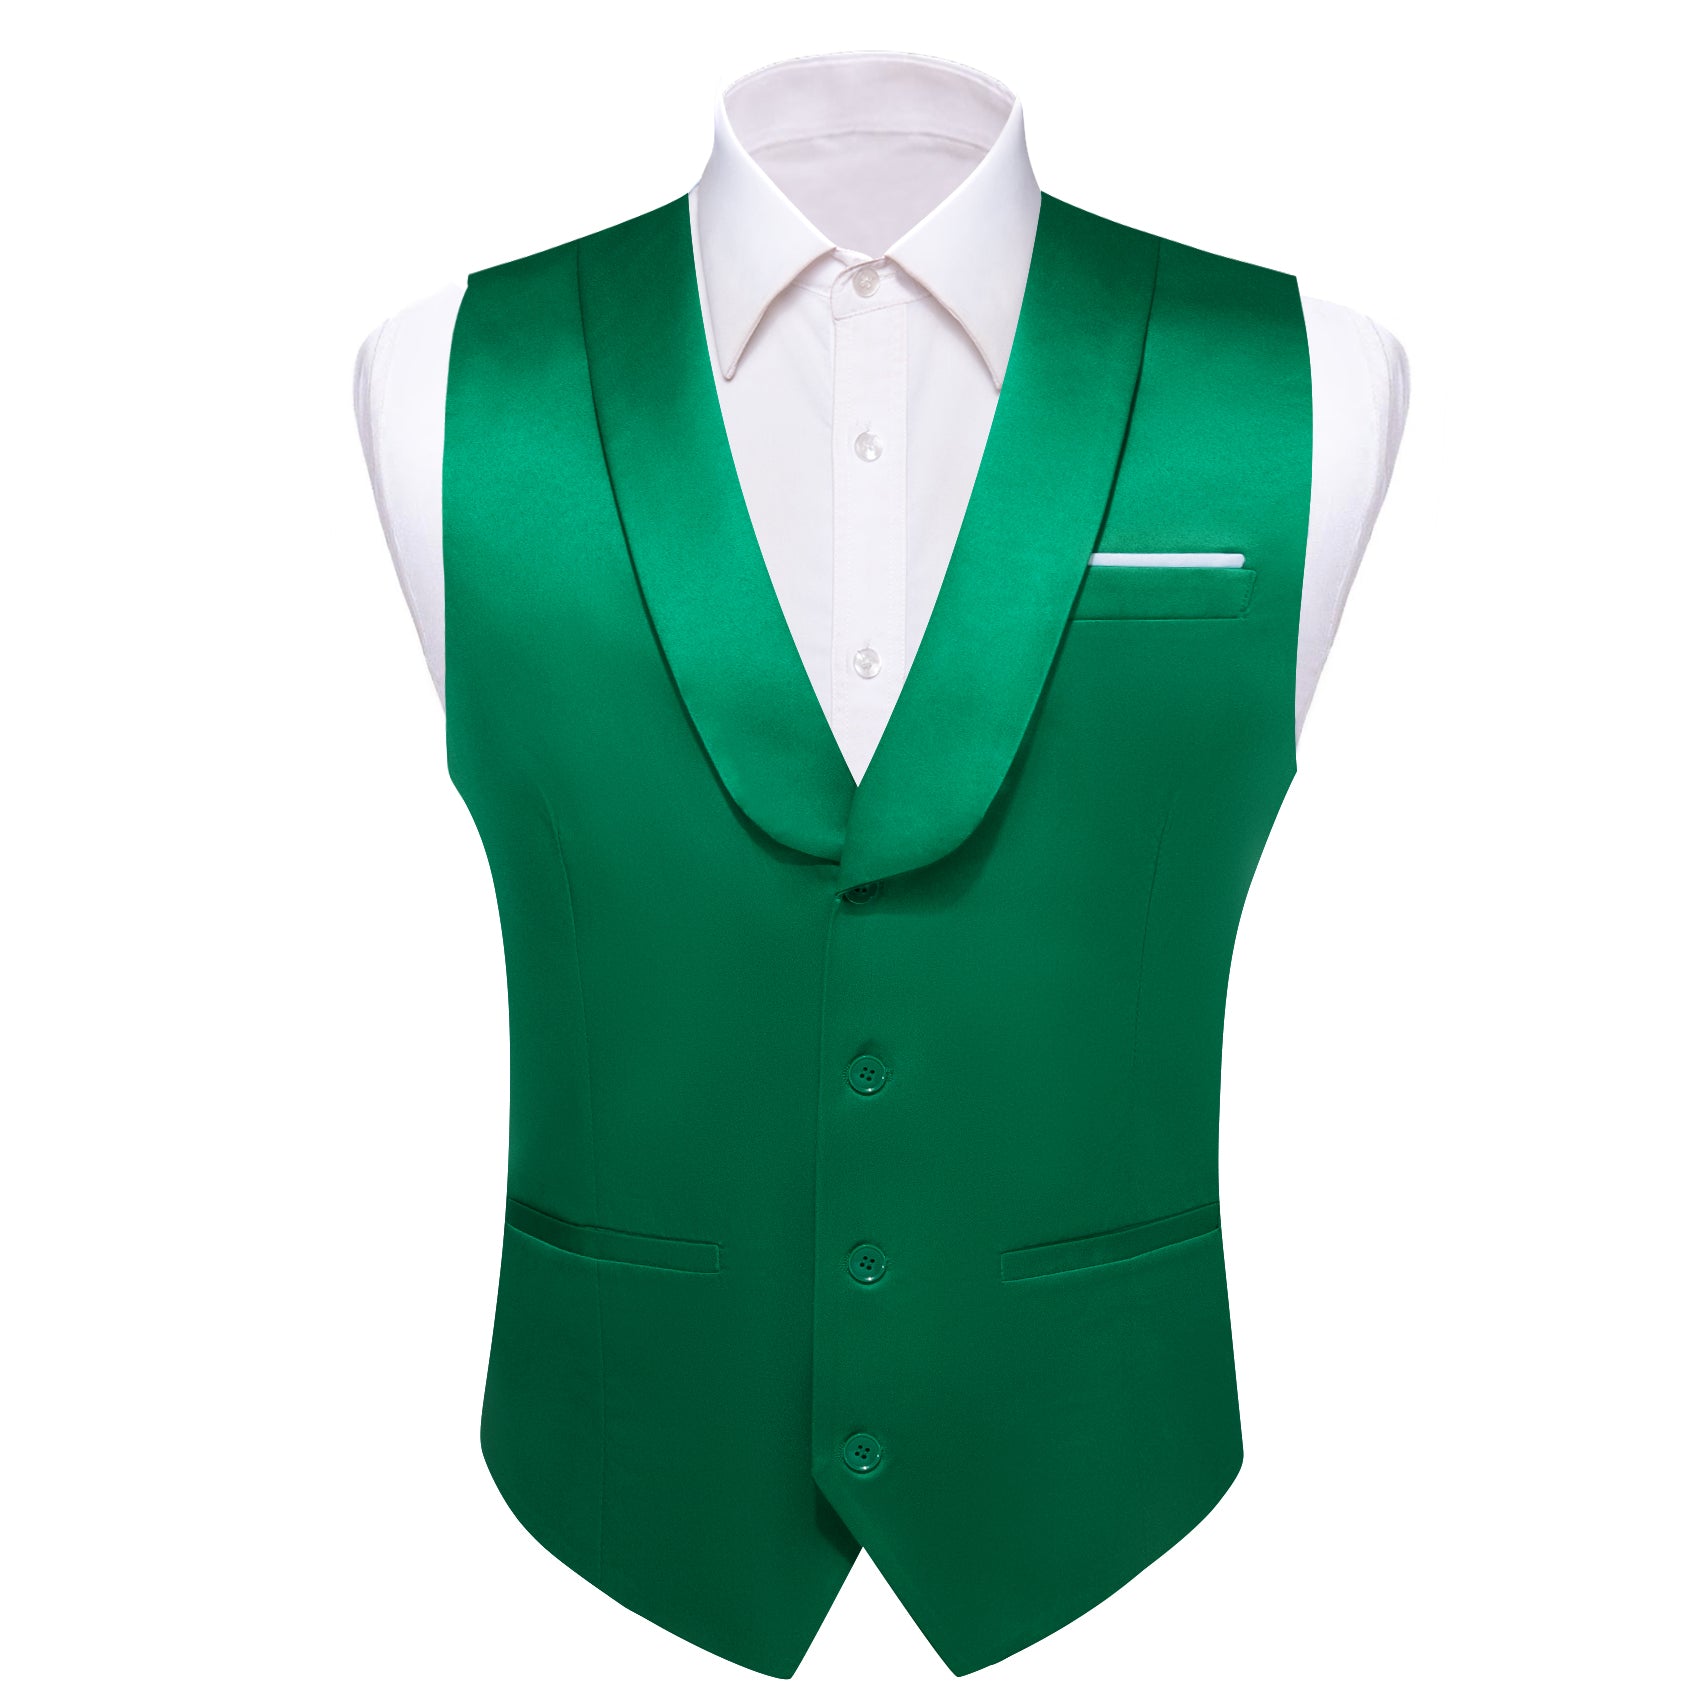 Barry.wang Novetly Green Solid Vest Waistcoat Set